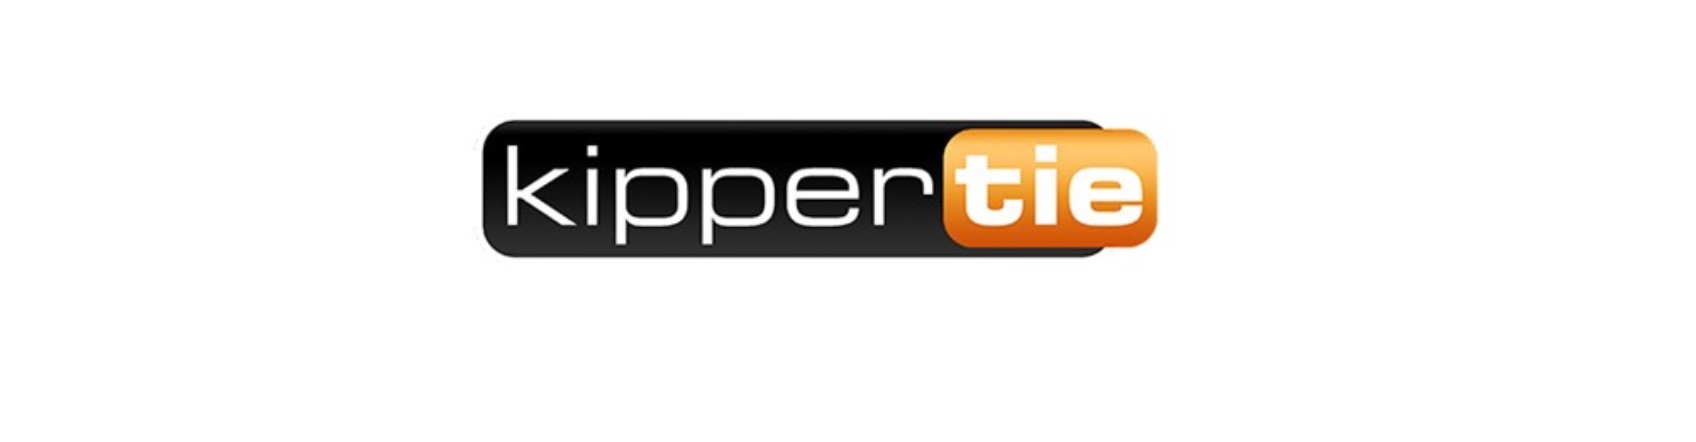 Kippertie logo Catts Camera